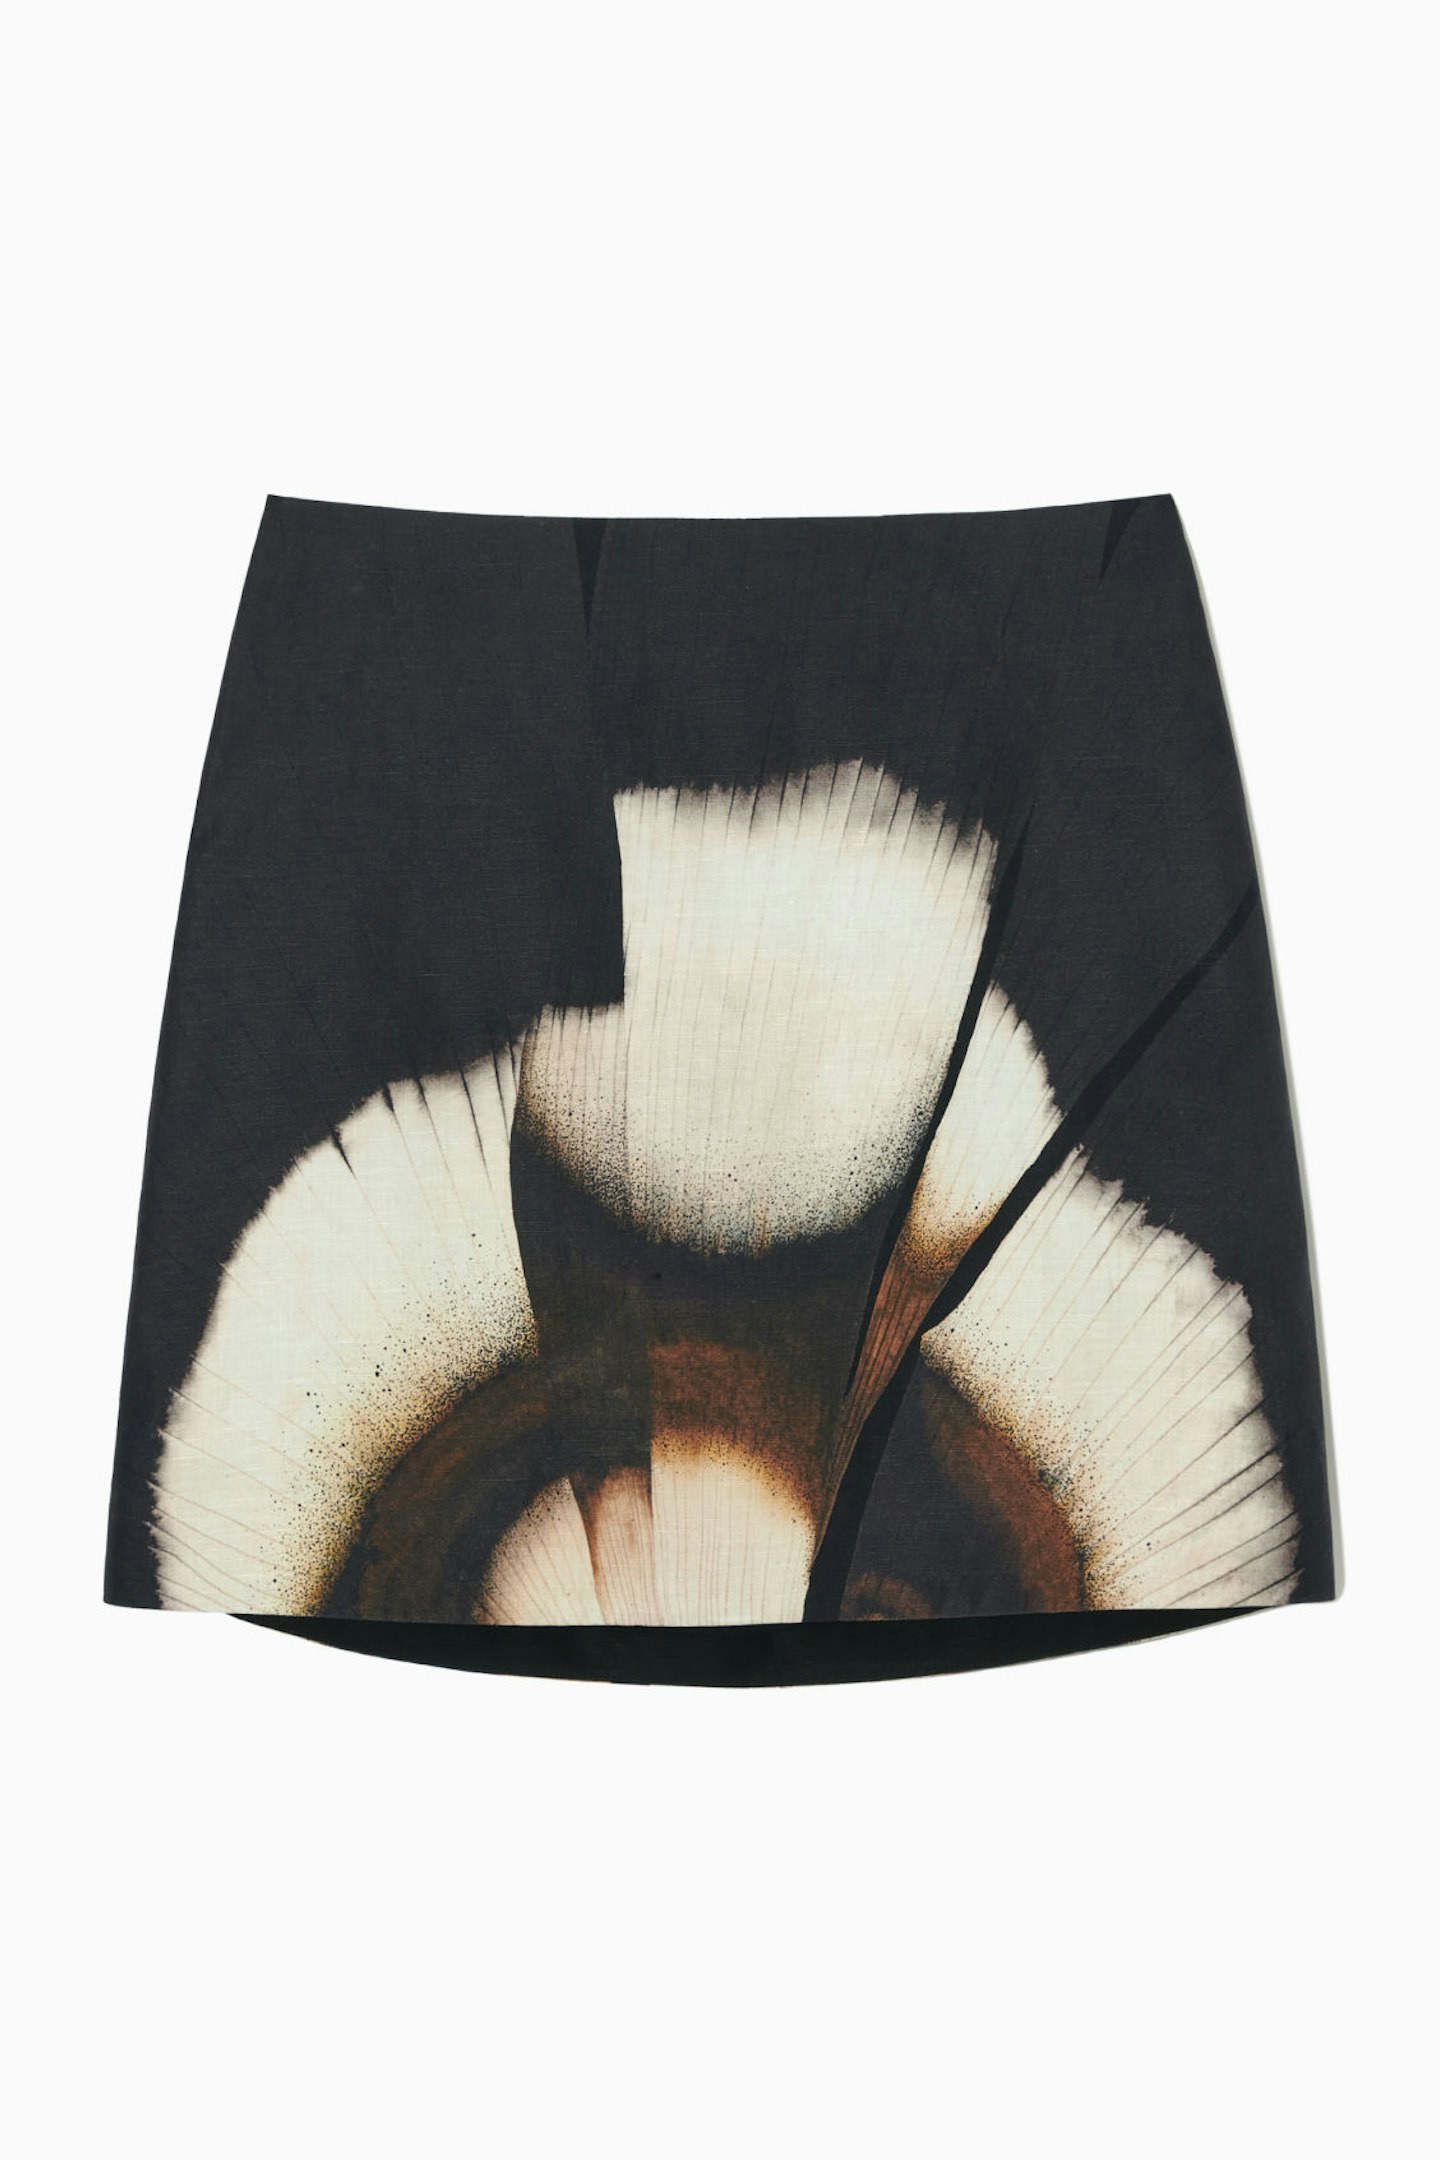 COS, Floral-Print Linen-Blend Mini Skirt